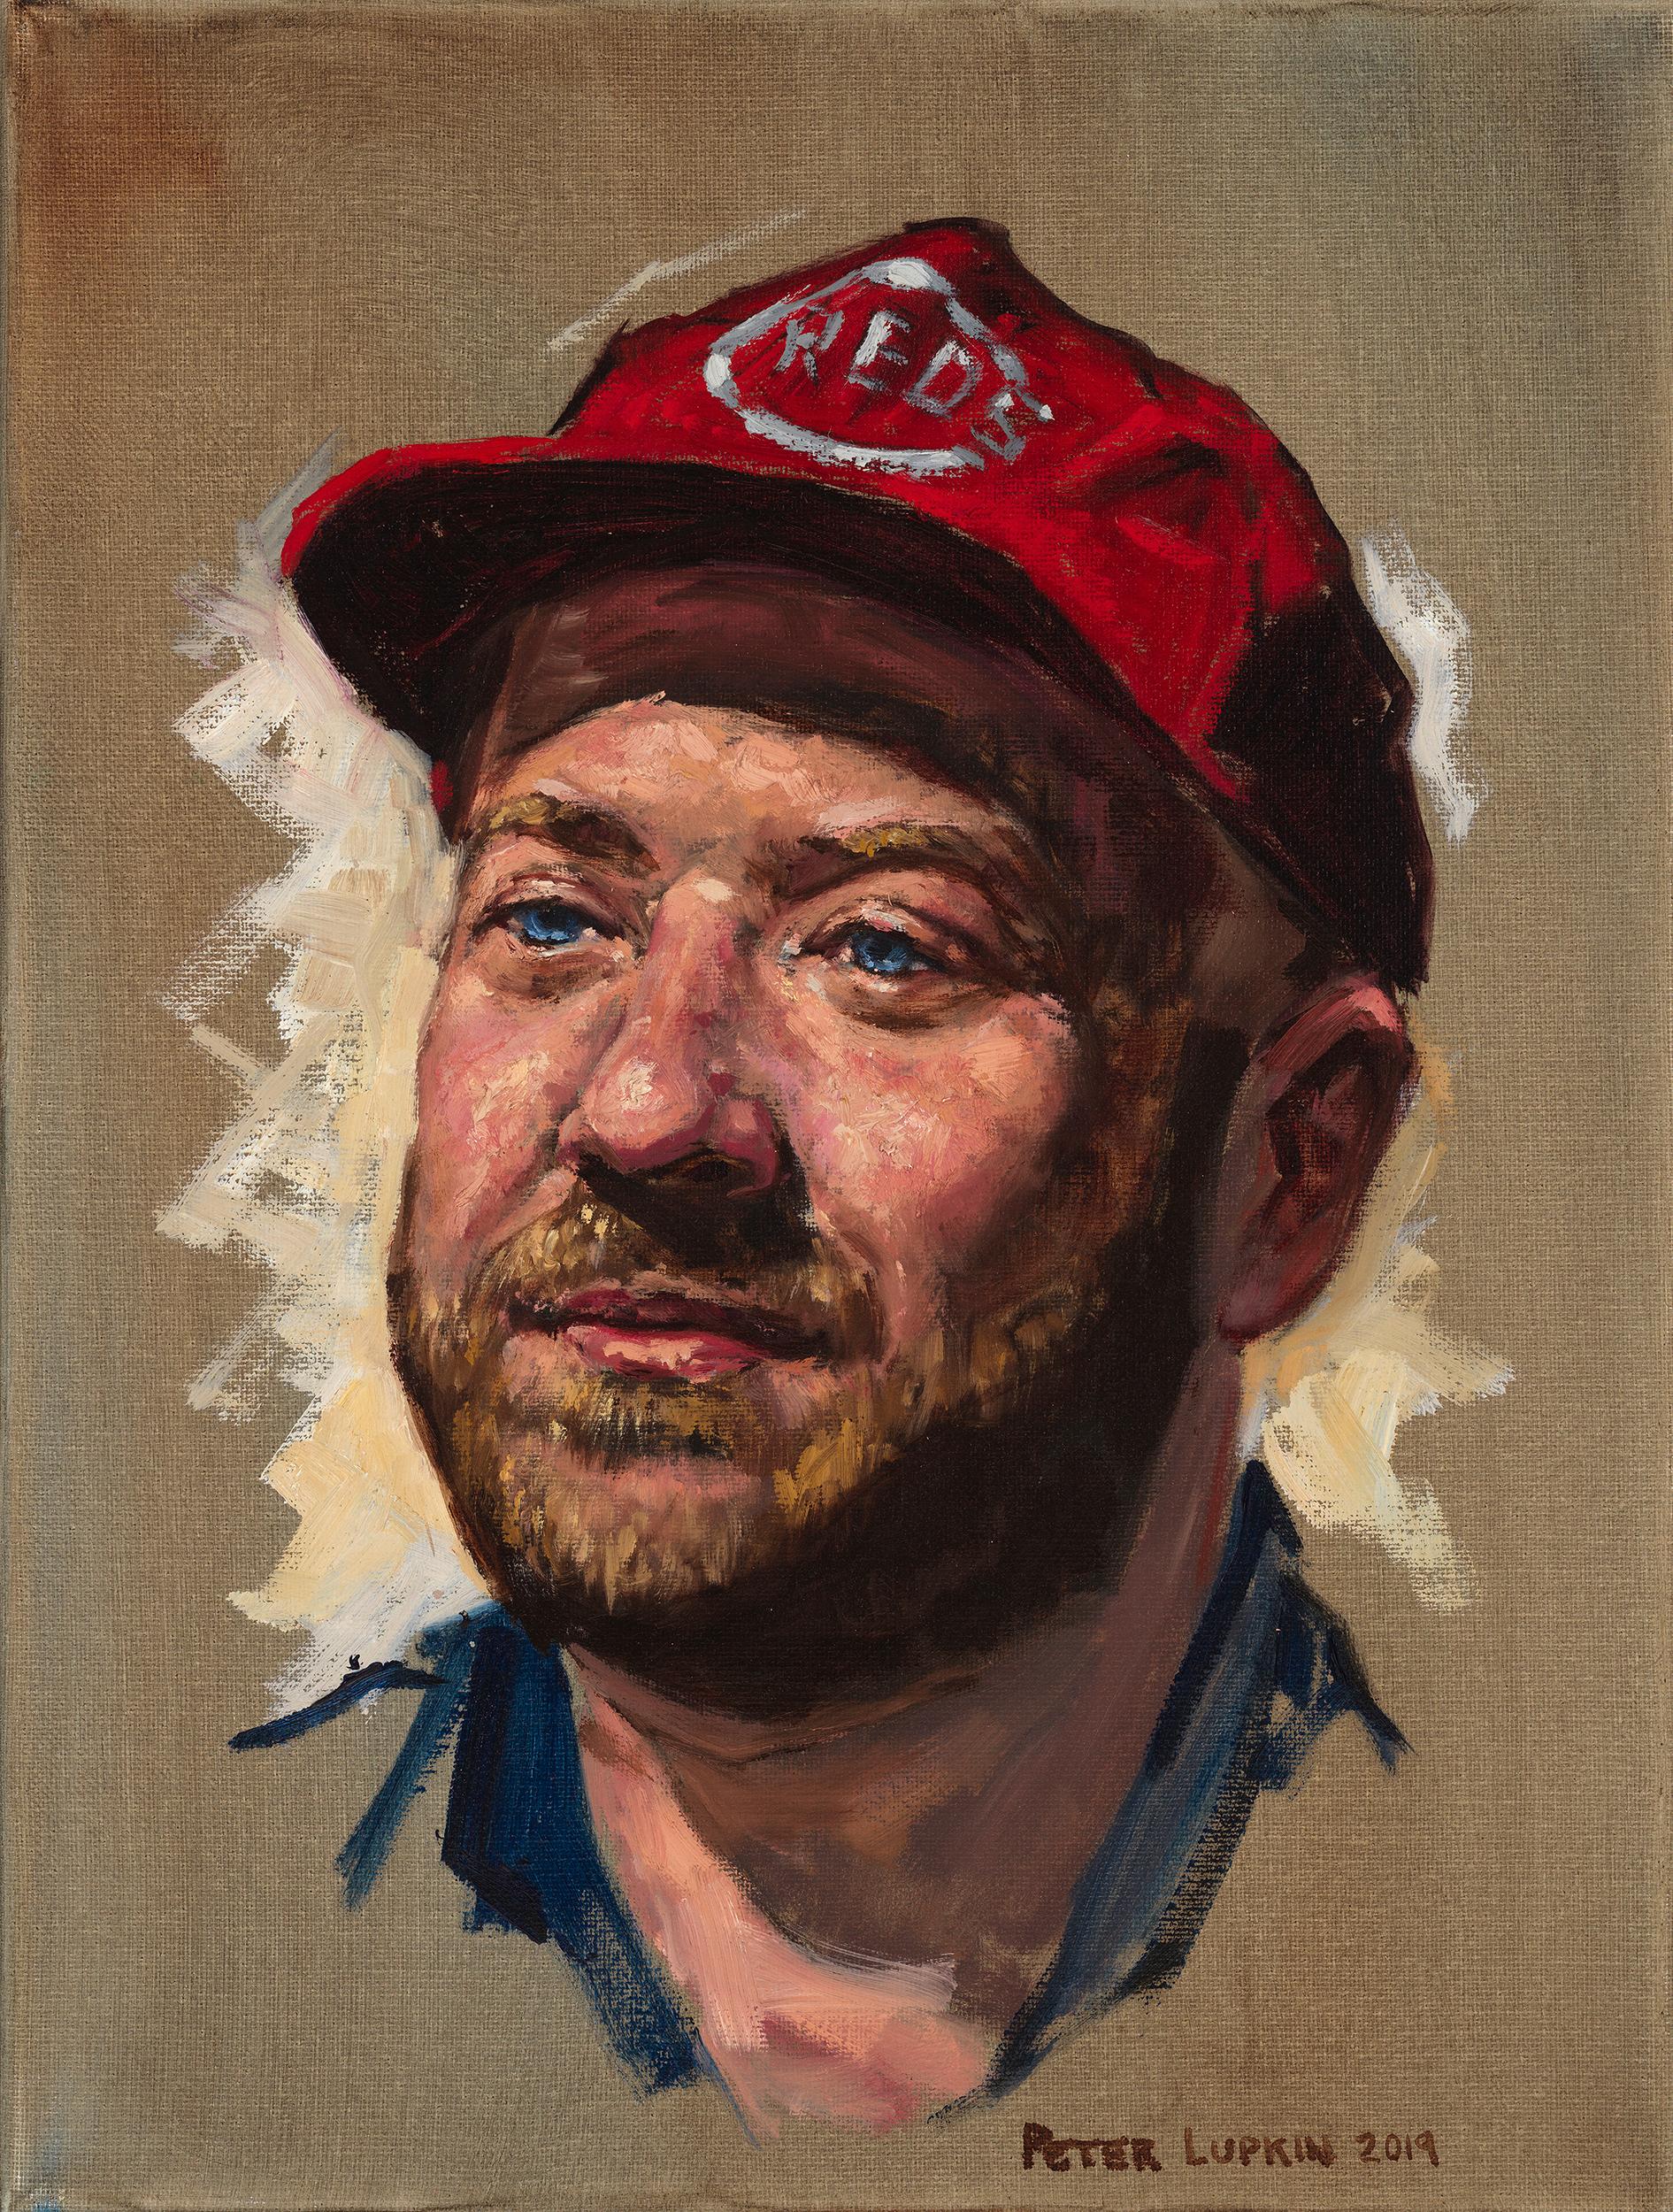 Peter Lupkin Figurative Painting - Portrait of a Bartender, John- Painting of a Guy Cincinnati Reds Baseball Cap